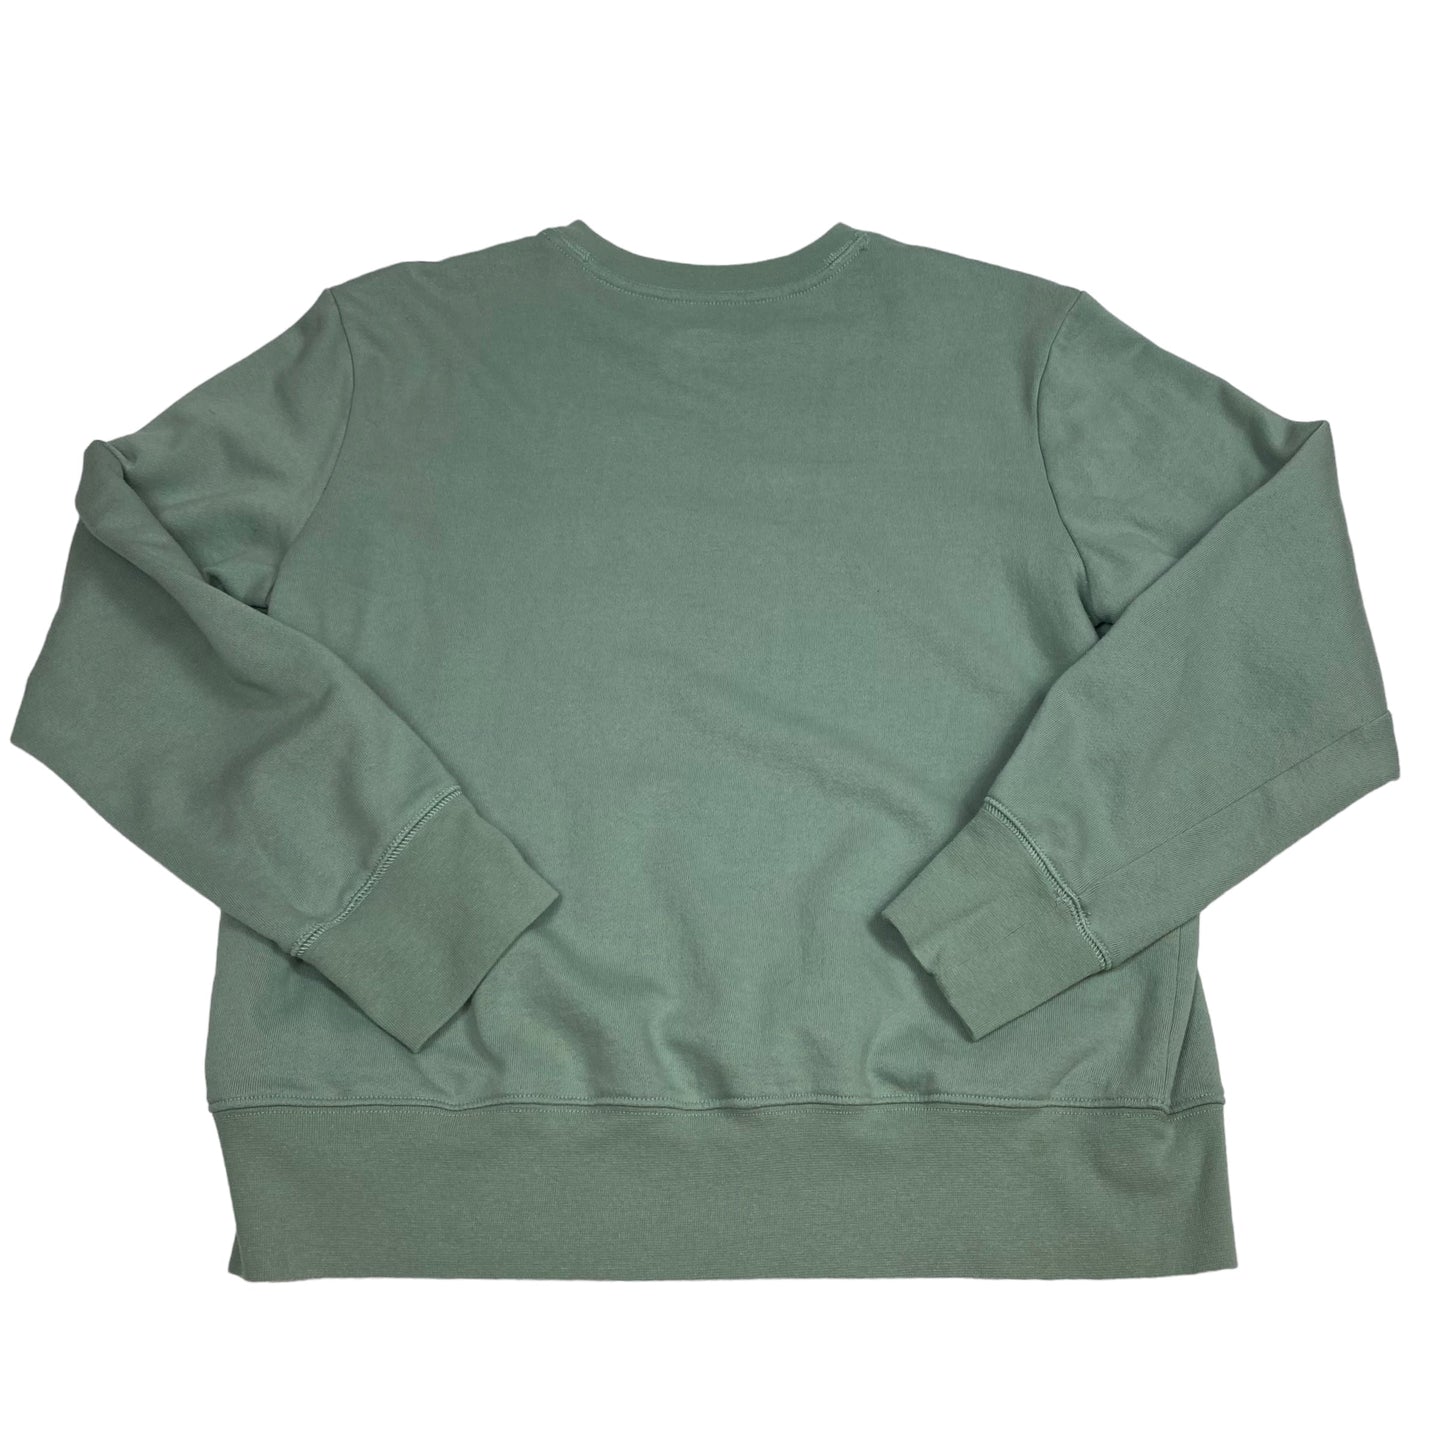 Athletic Sweatshirt Crewneck By Athletic Works  Size: 1x